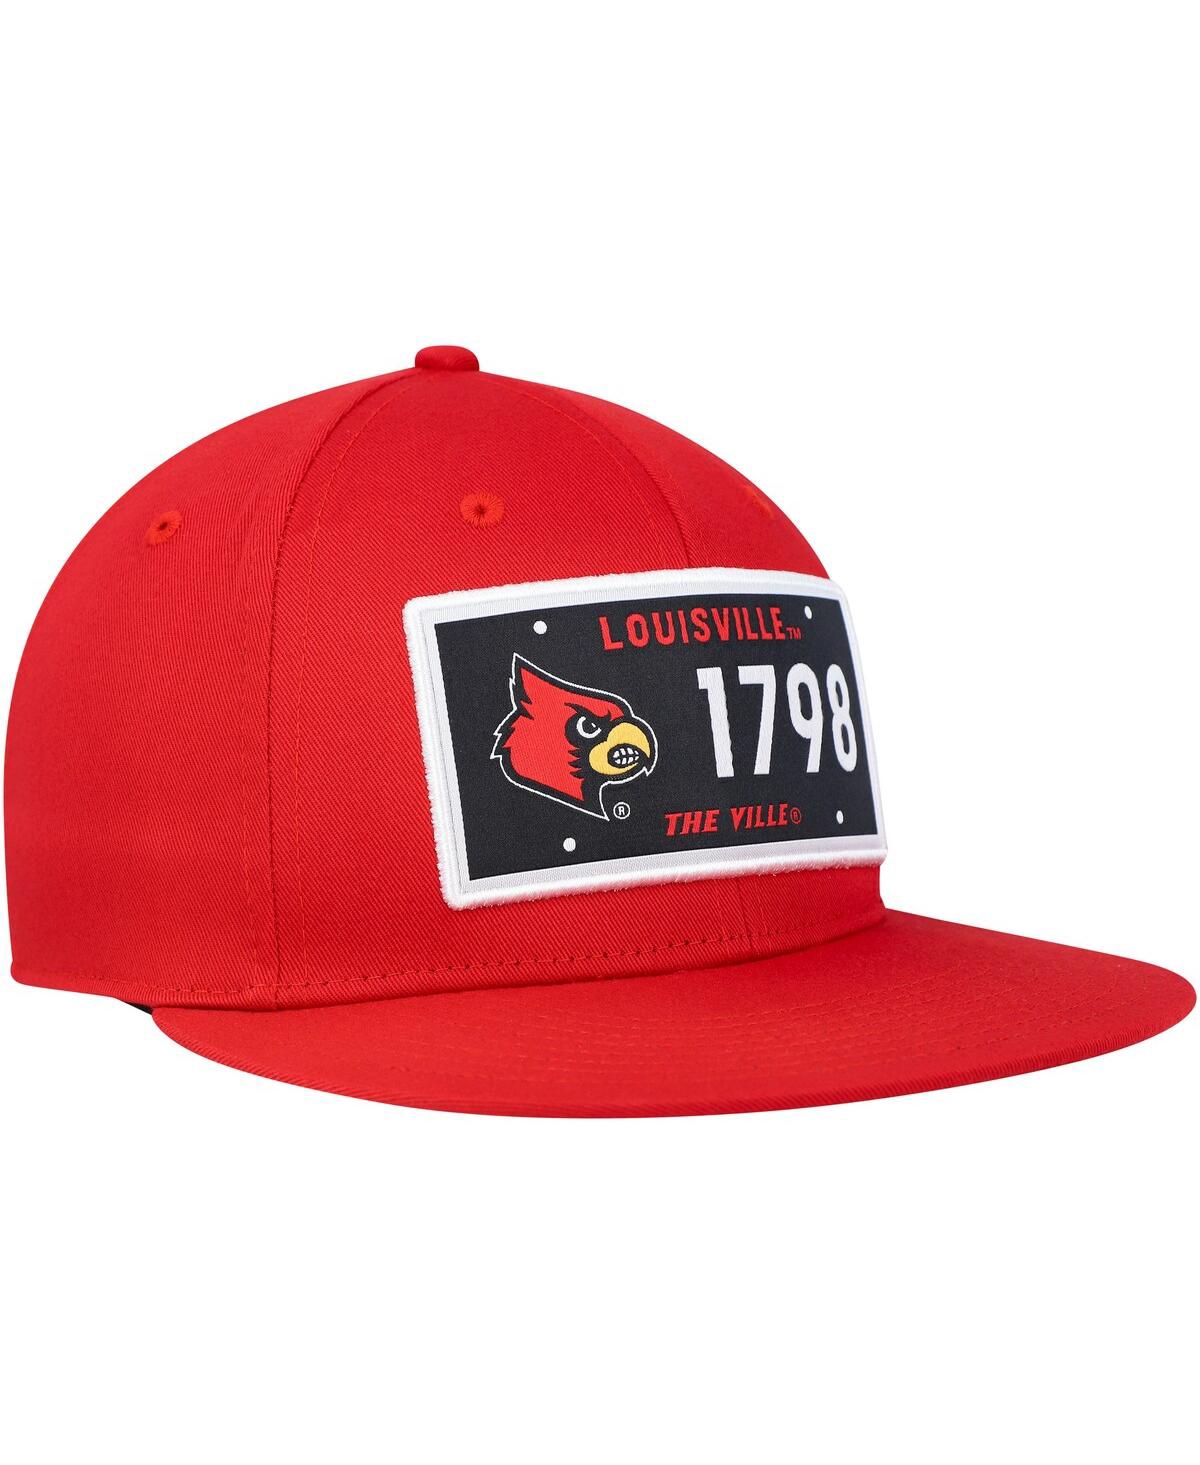 Shop Adidas Originals Men's Adidas Red Louisville Cardinals Established Snapback Hat